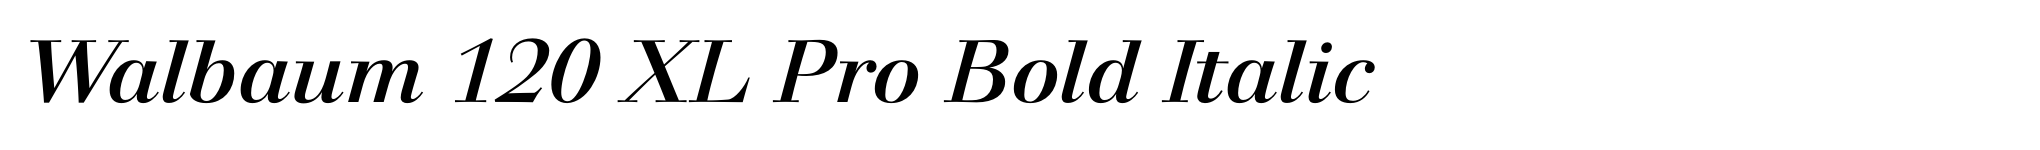 Walbaum 120 XL Pro Bold Italic image